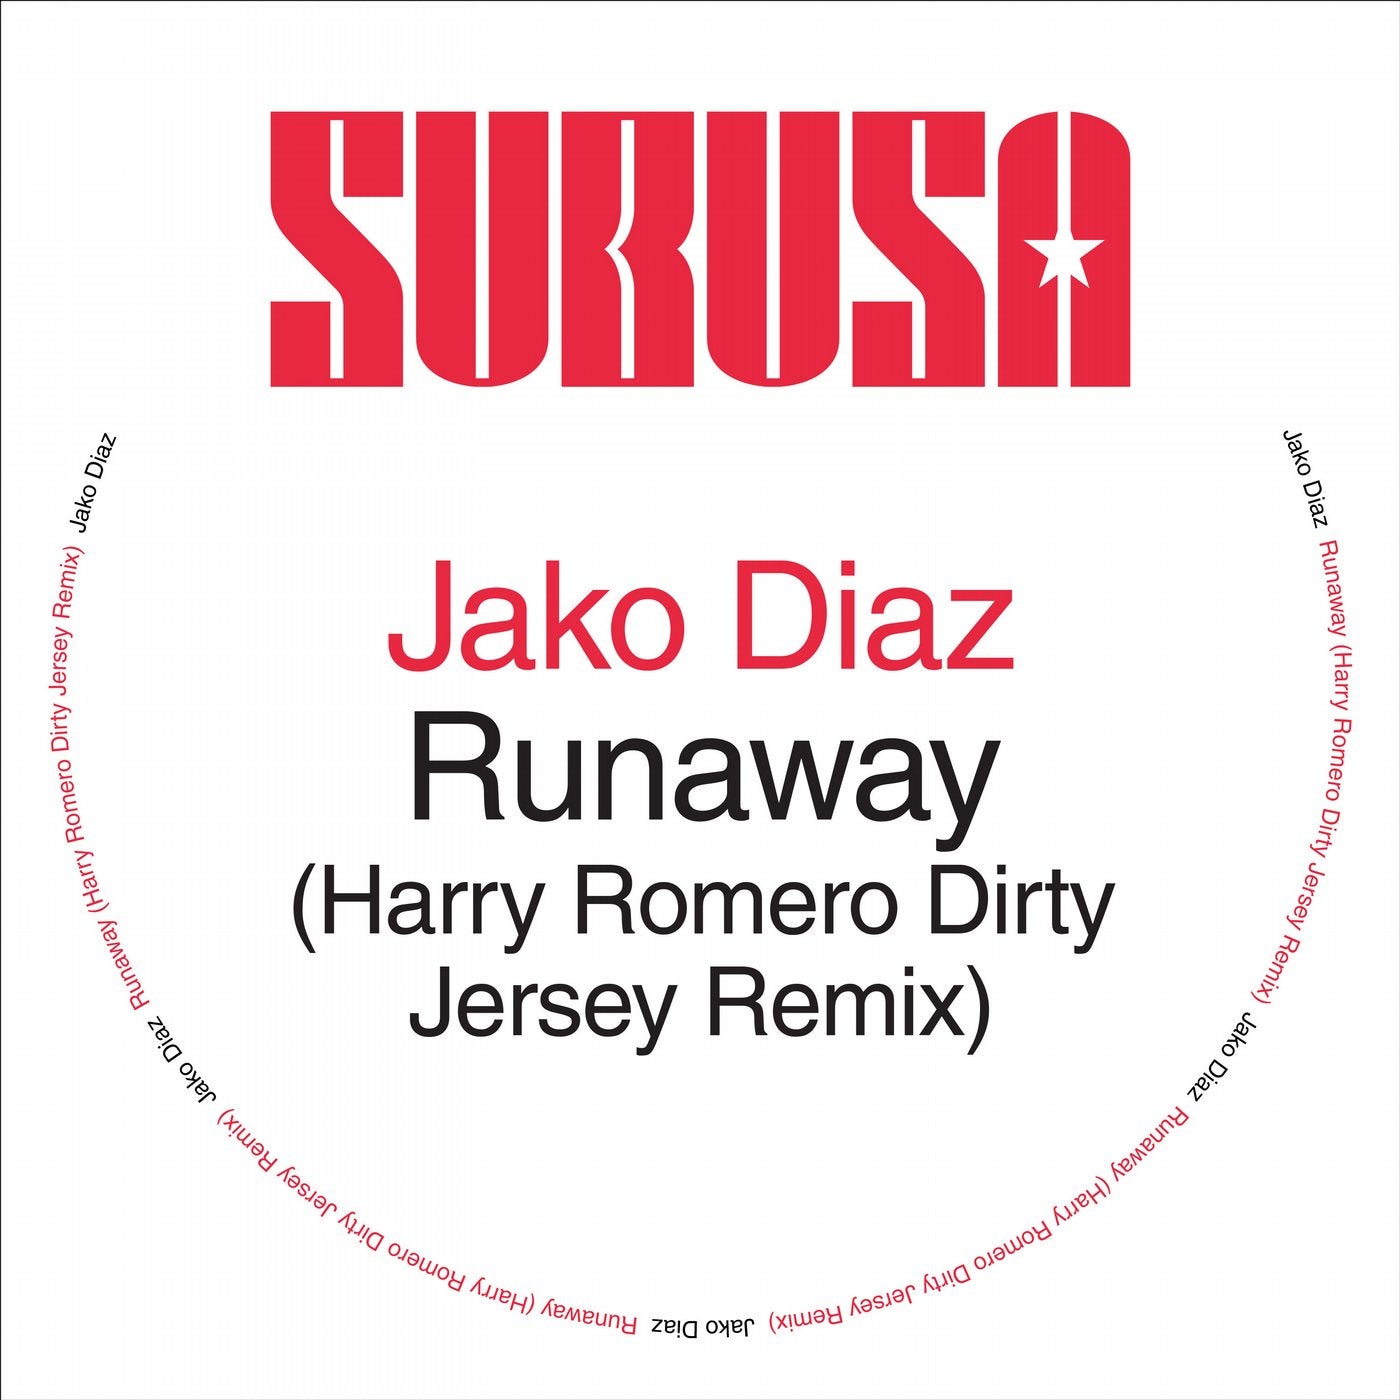 Runaway - Harry Romero Dirty Jersey Remix